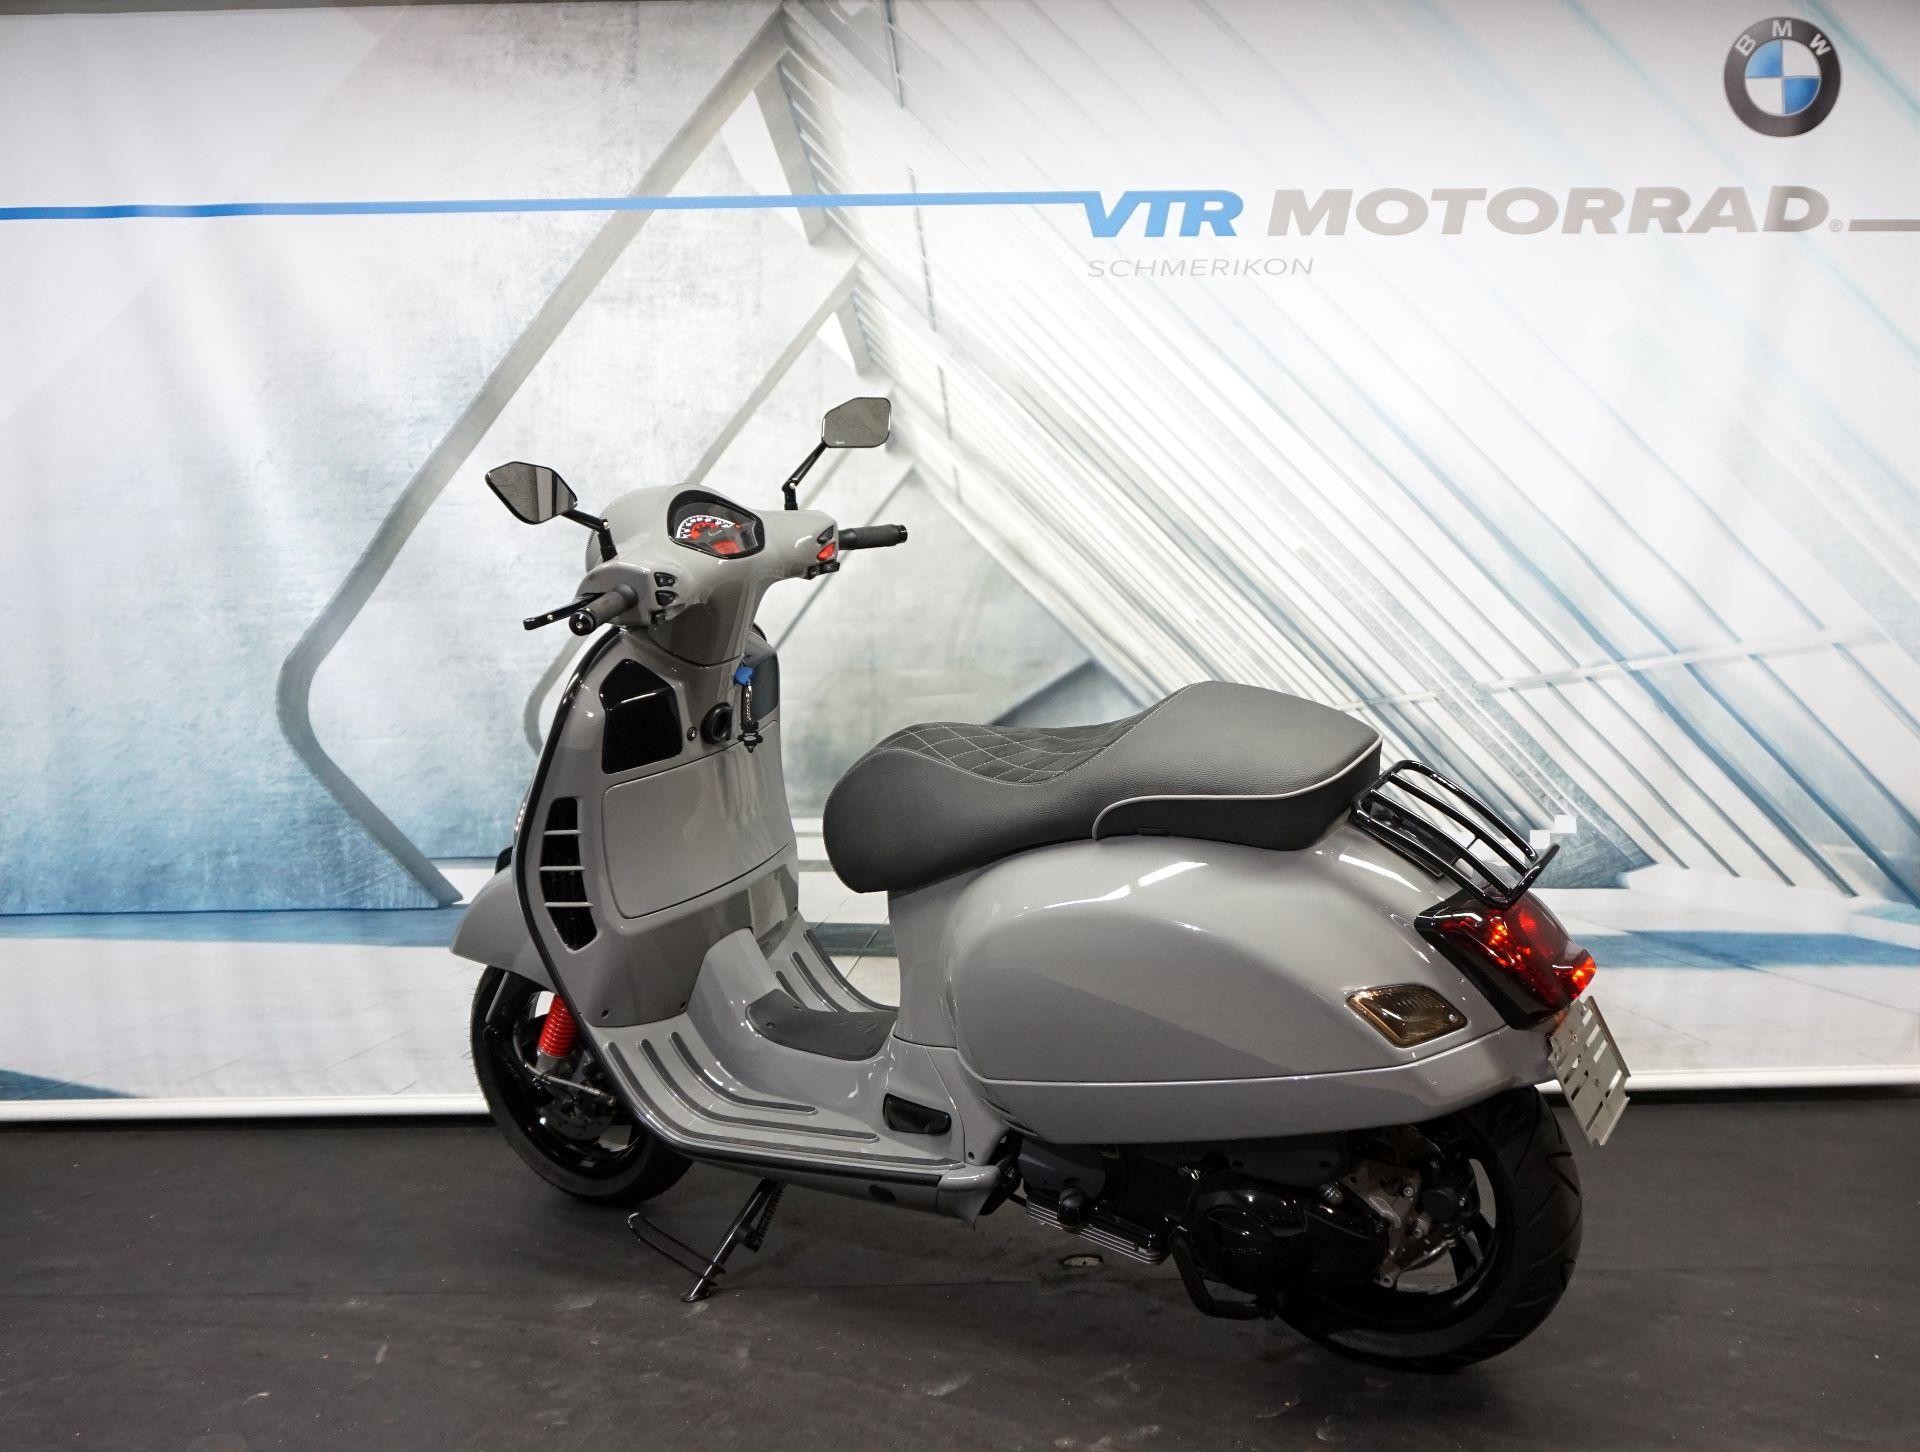 Motorrad Occasion kaufen PIAGGIO Vespa GTS 300 Super Custom VTR ...